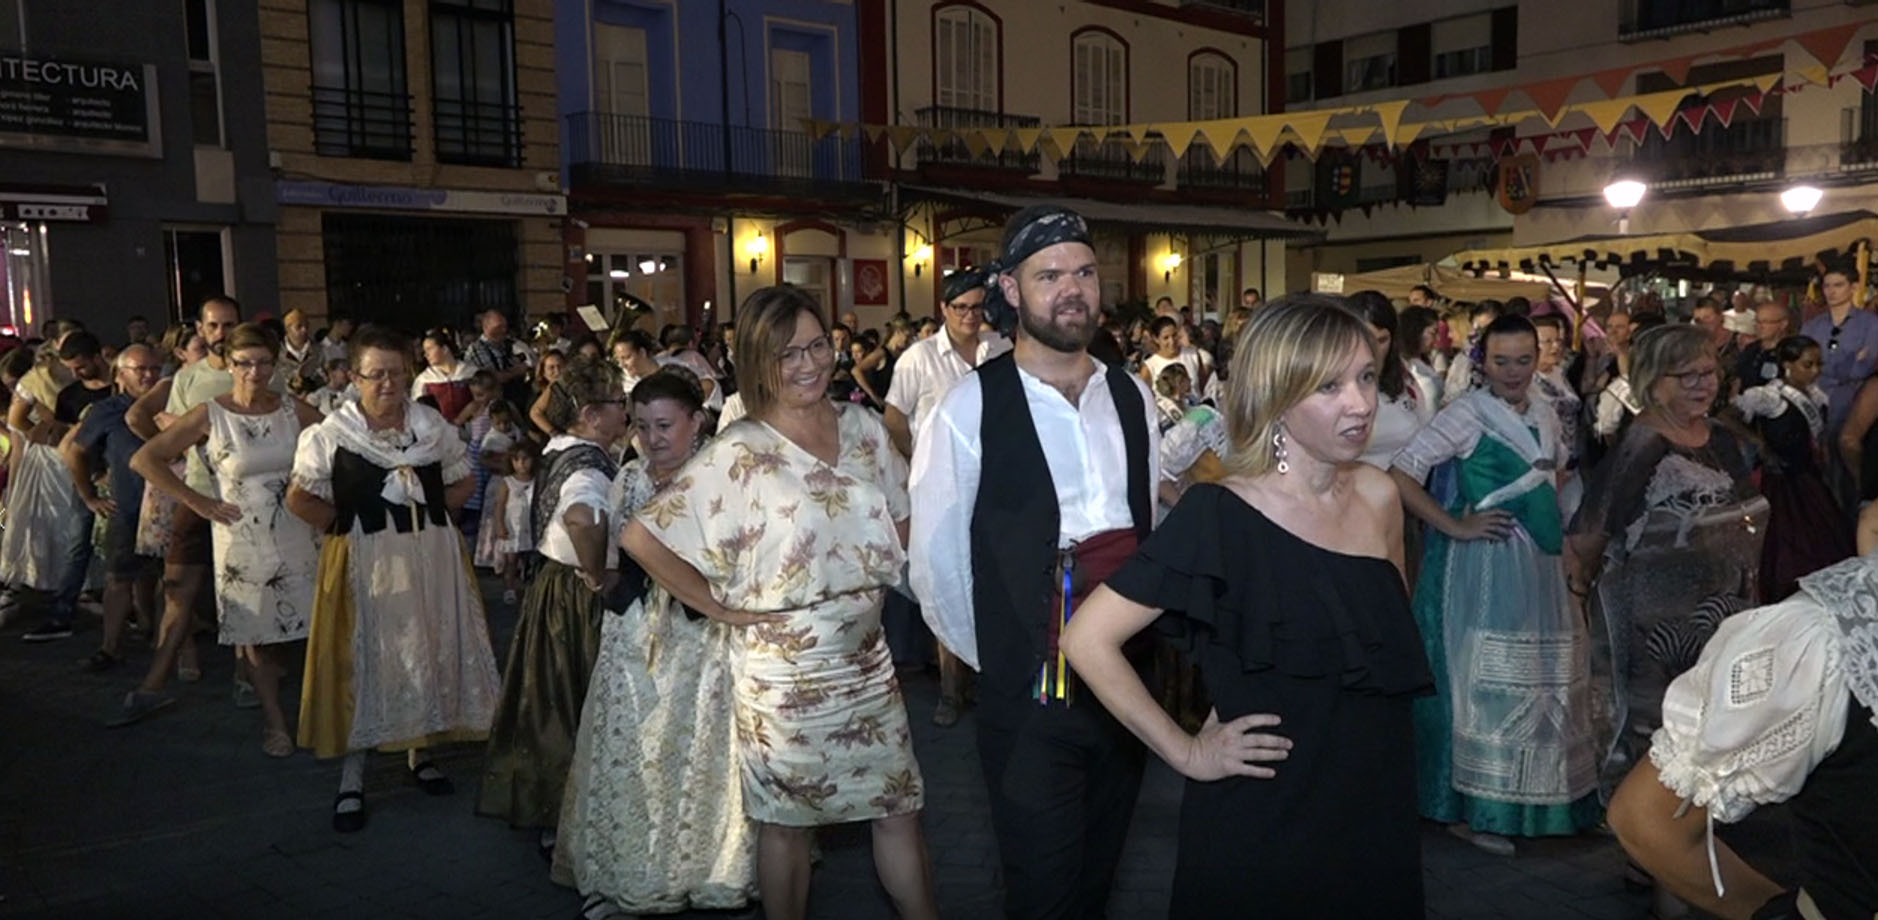 Benicarló, centenars de persones participen en la ballada popular